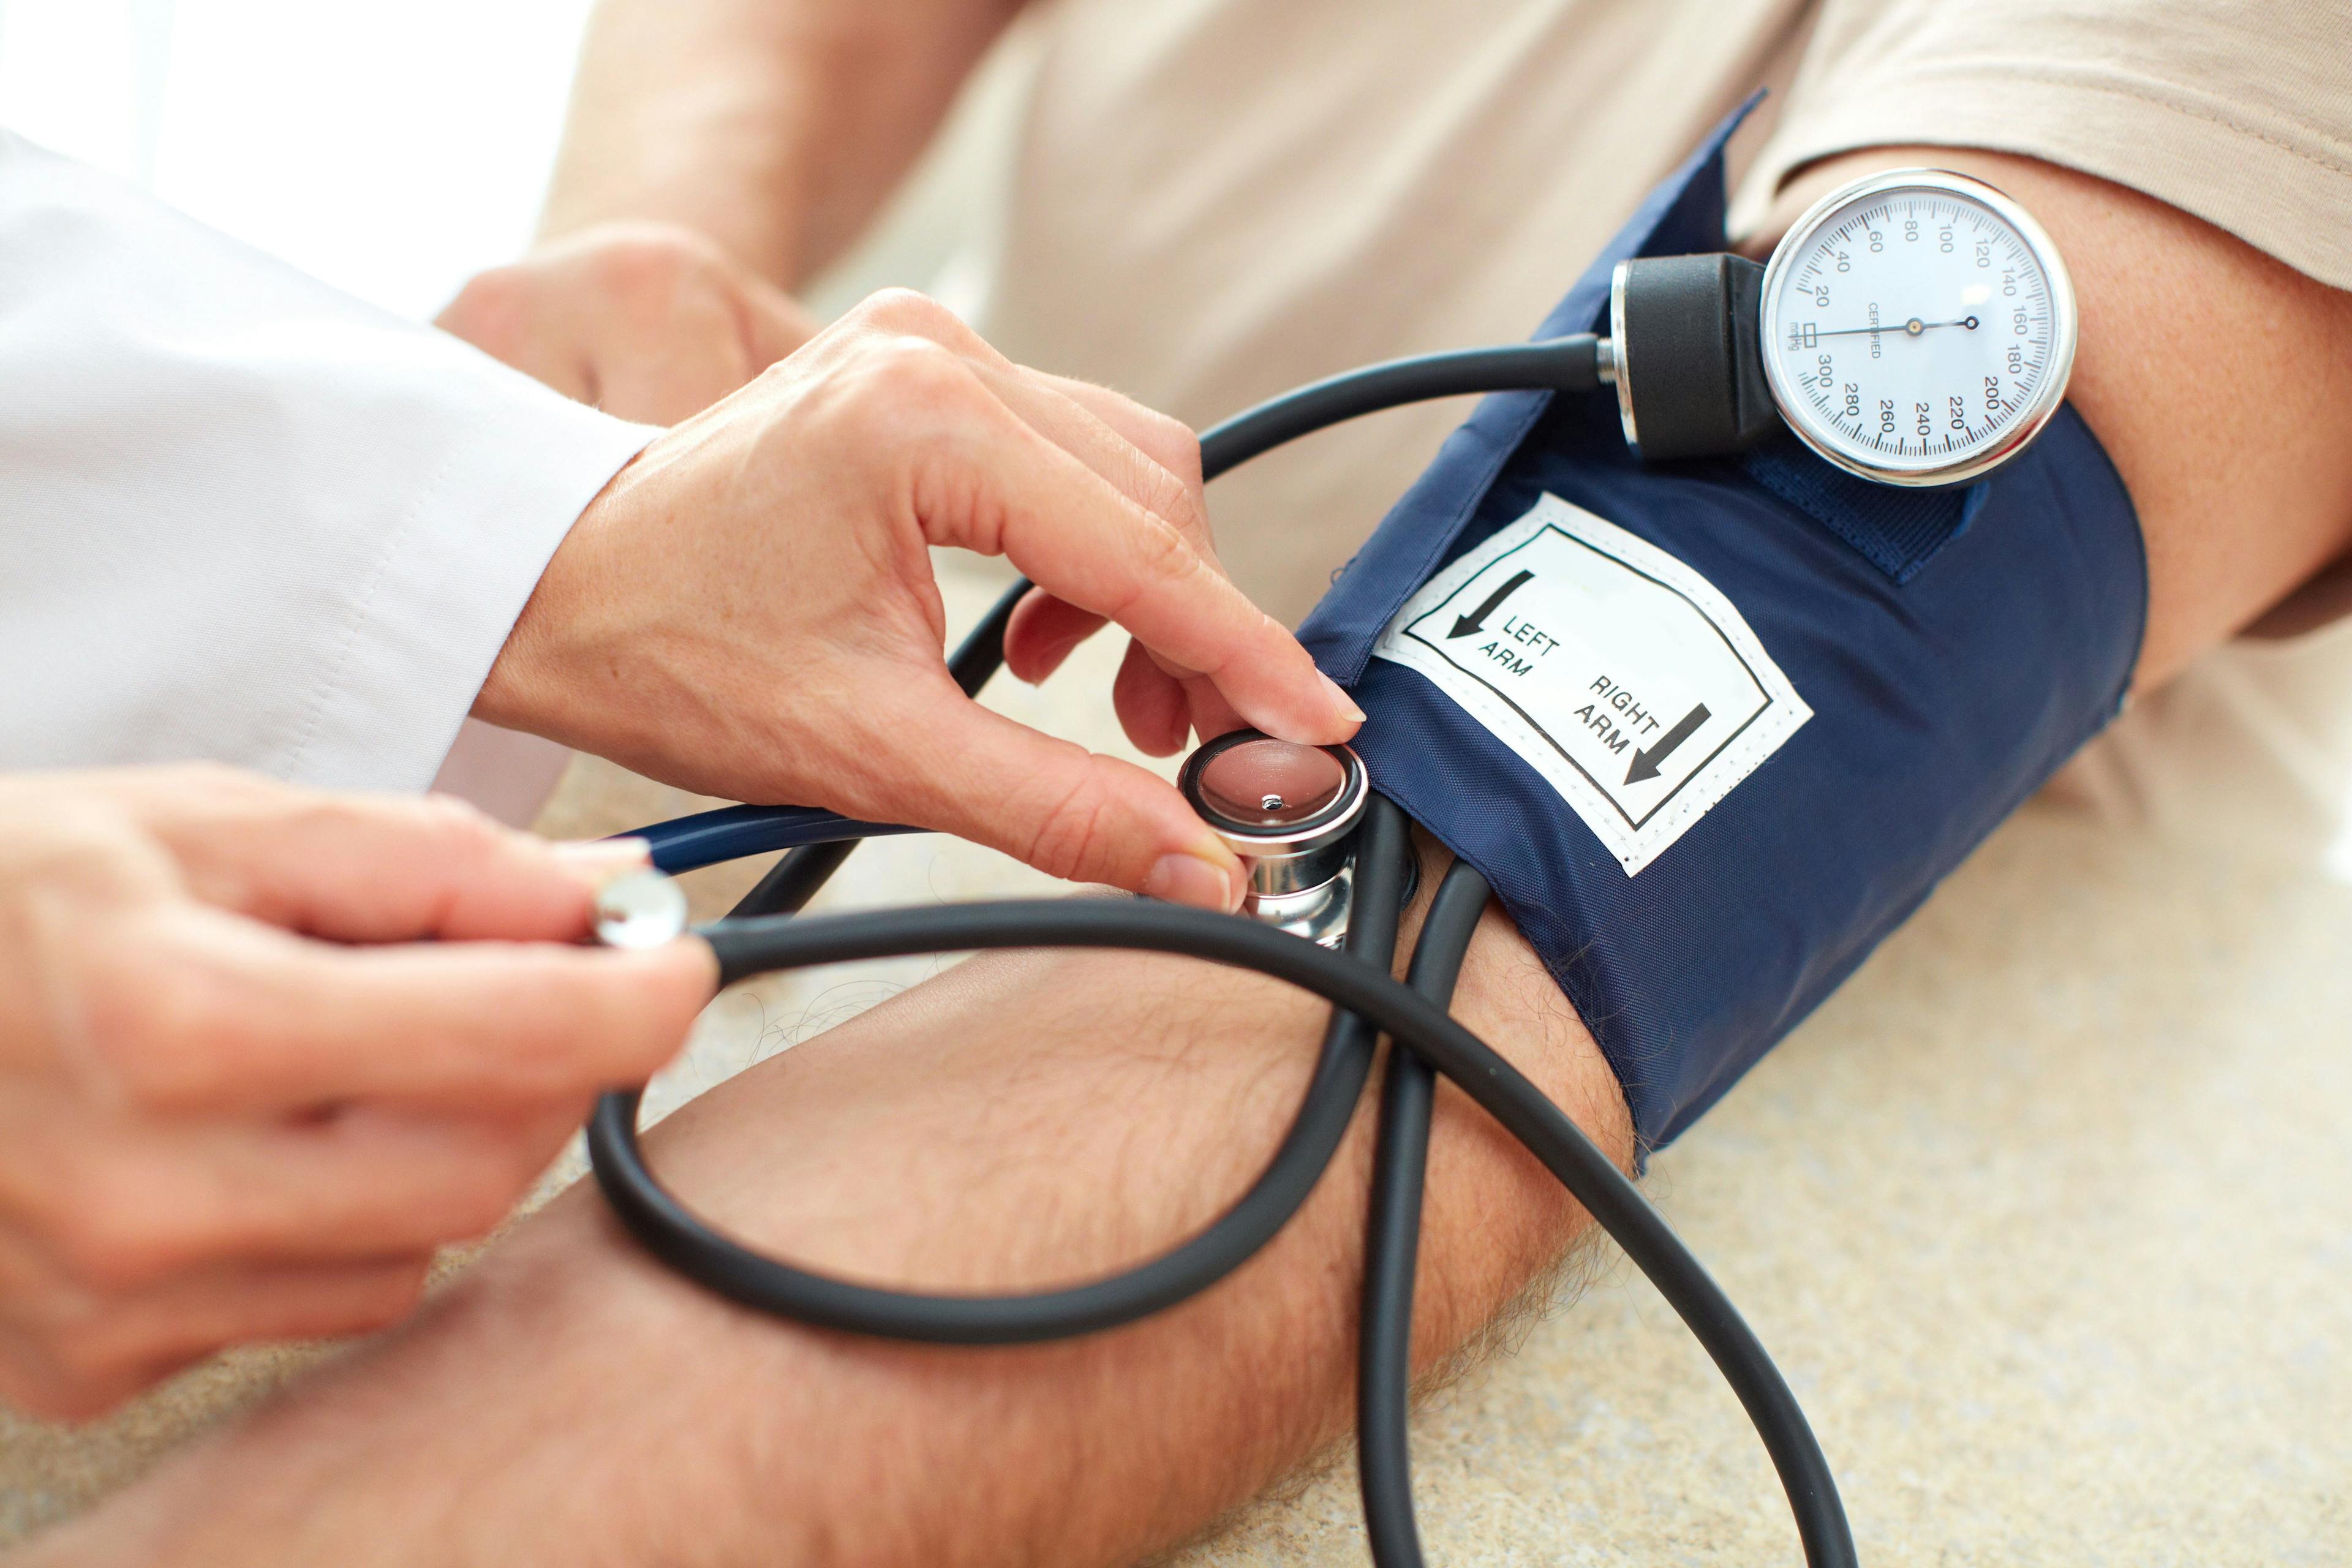 Blood pressure measuring | Image credit: Kurhan - stock.adobe.com